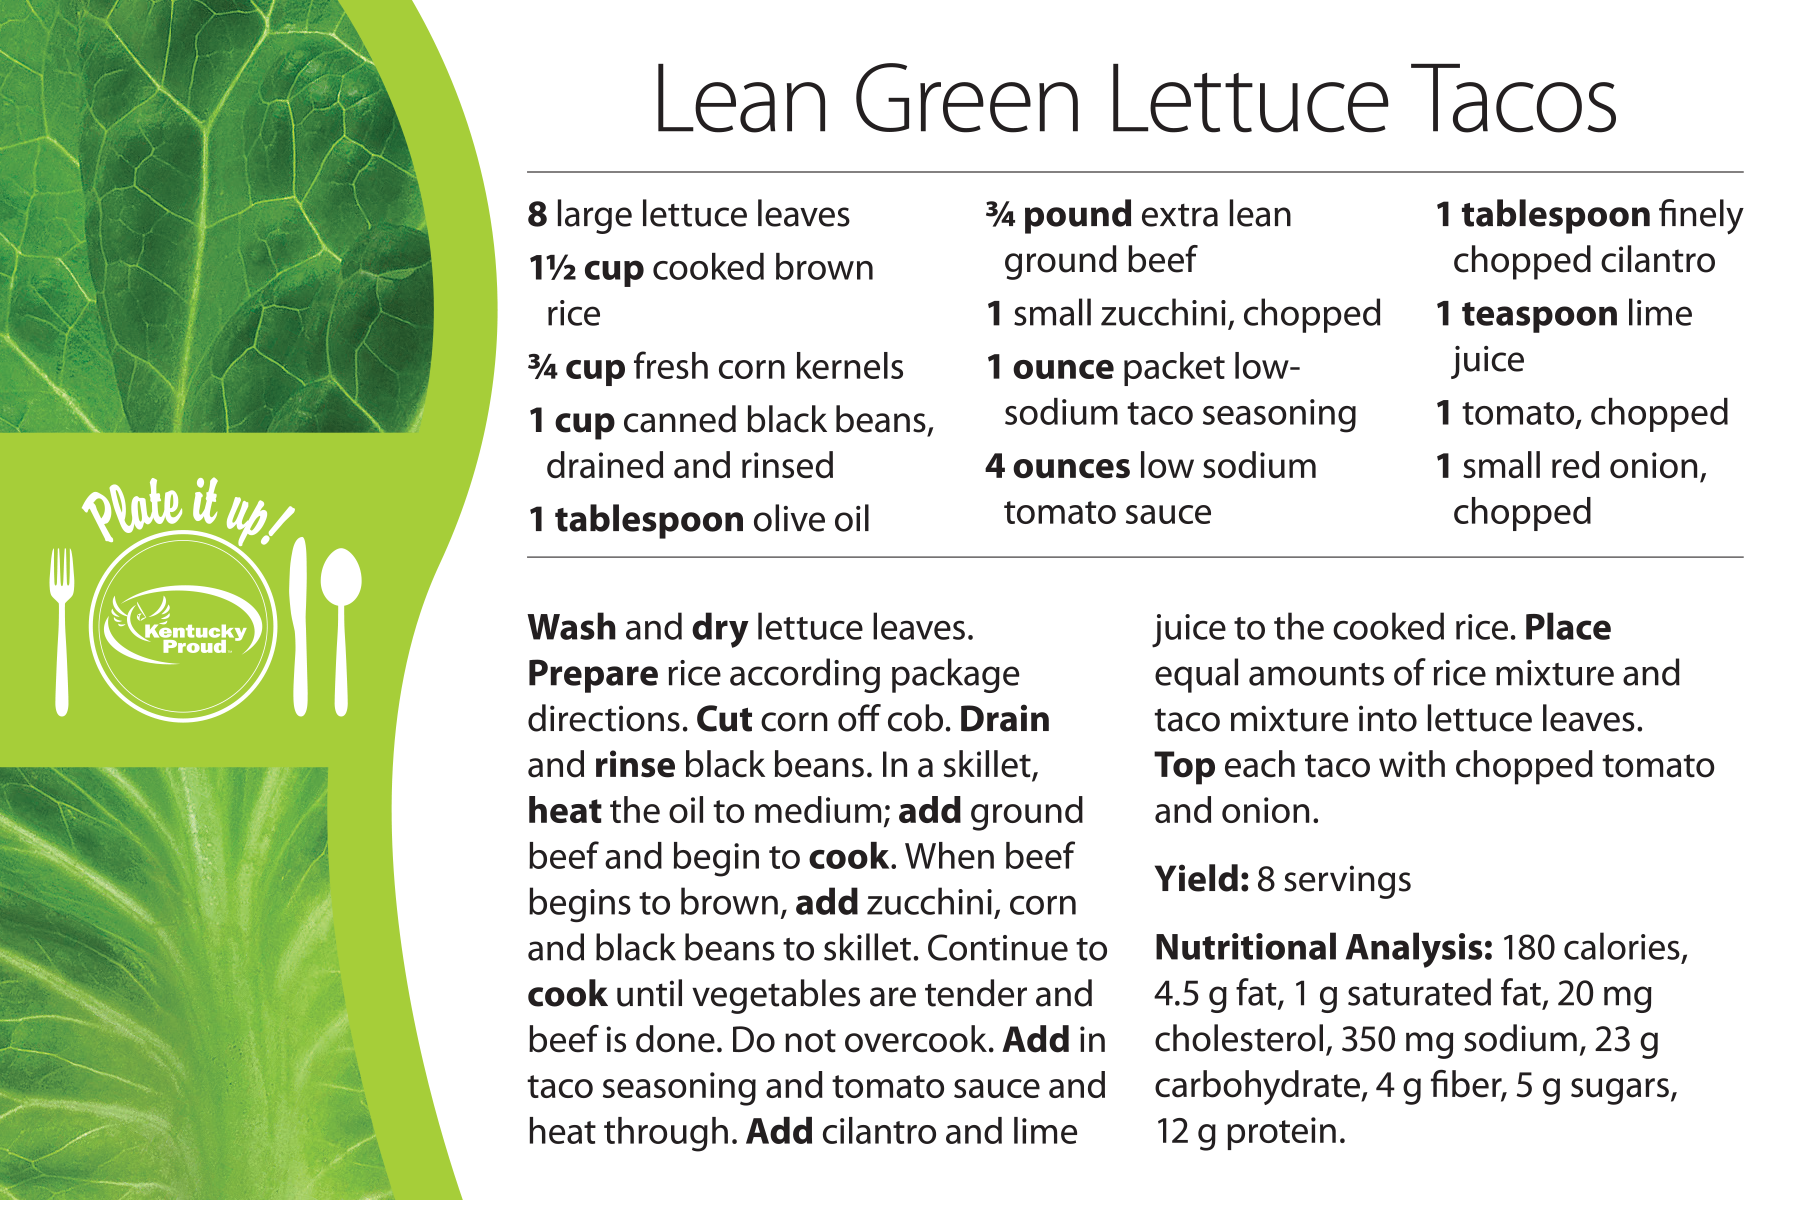 Recipe of lean green lettuce tacos